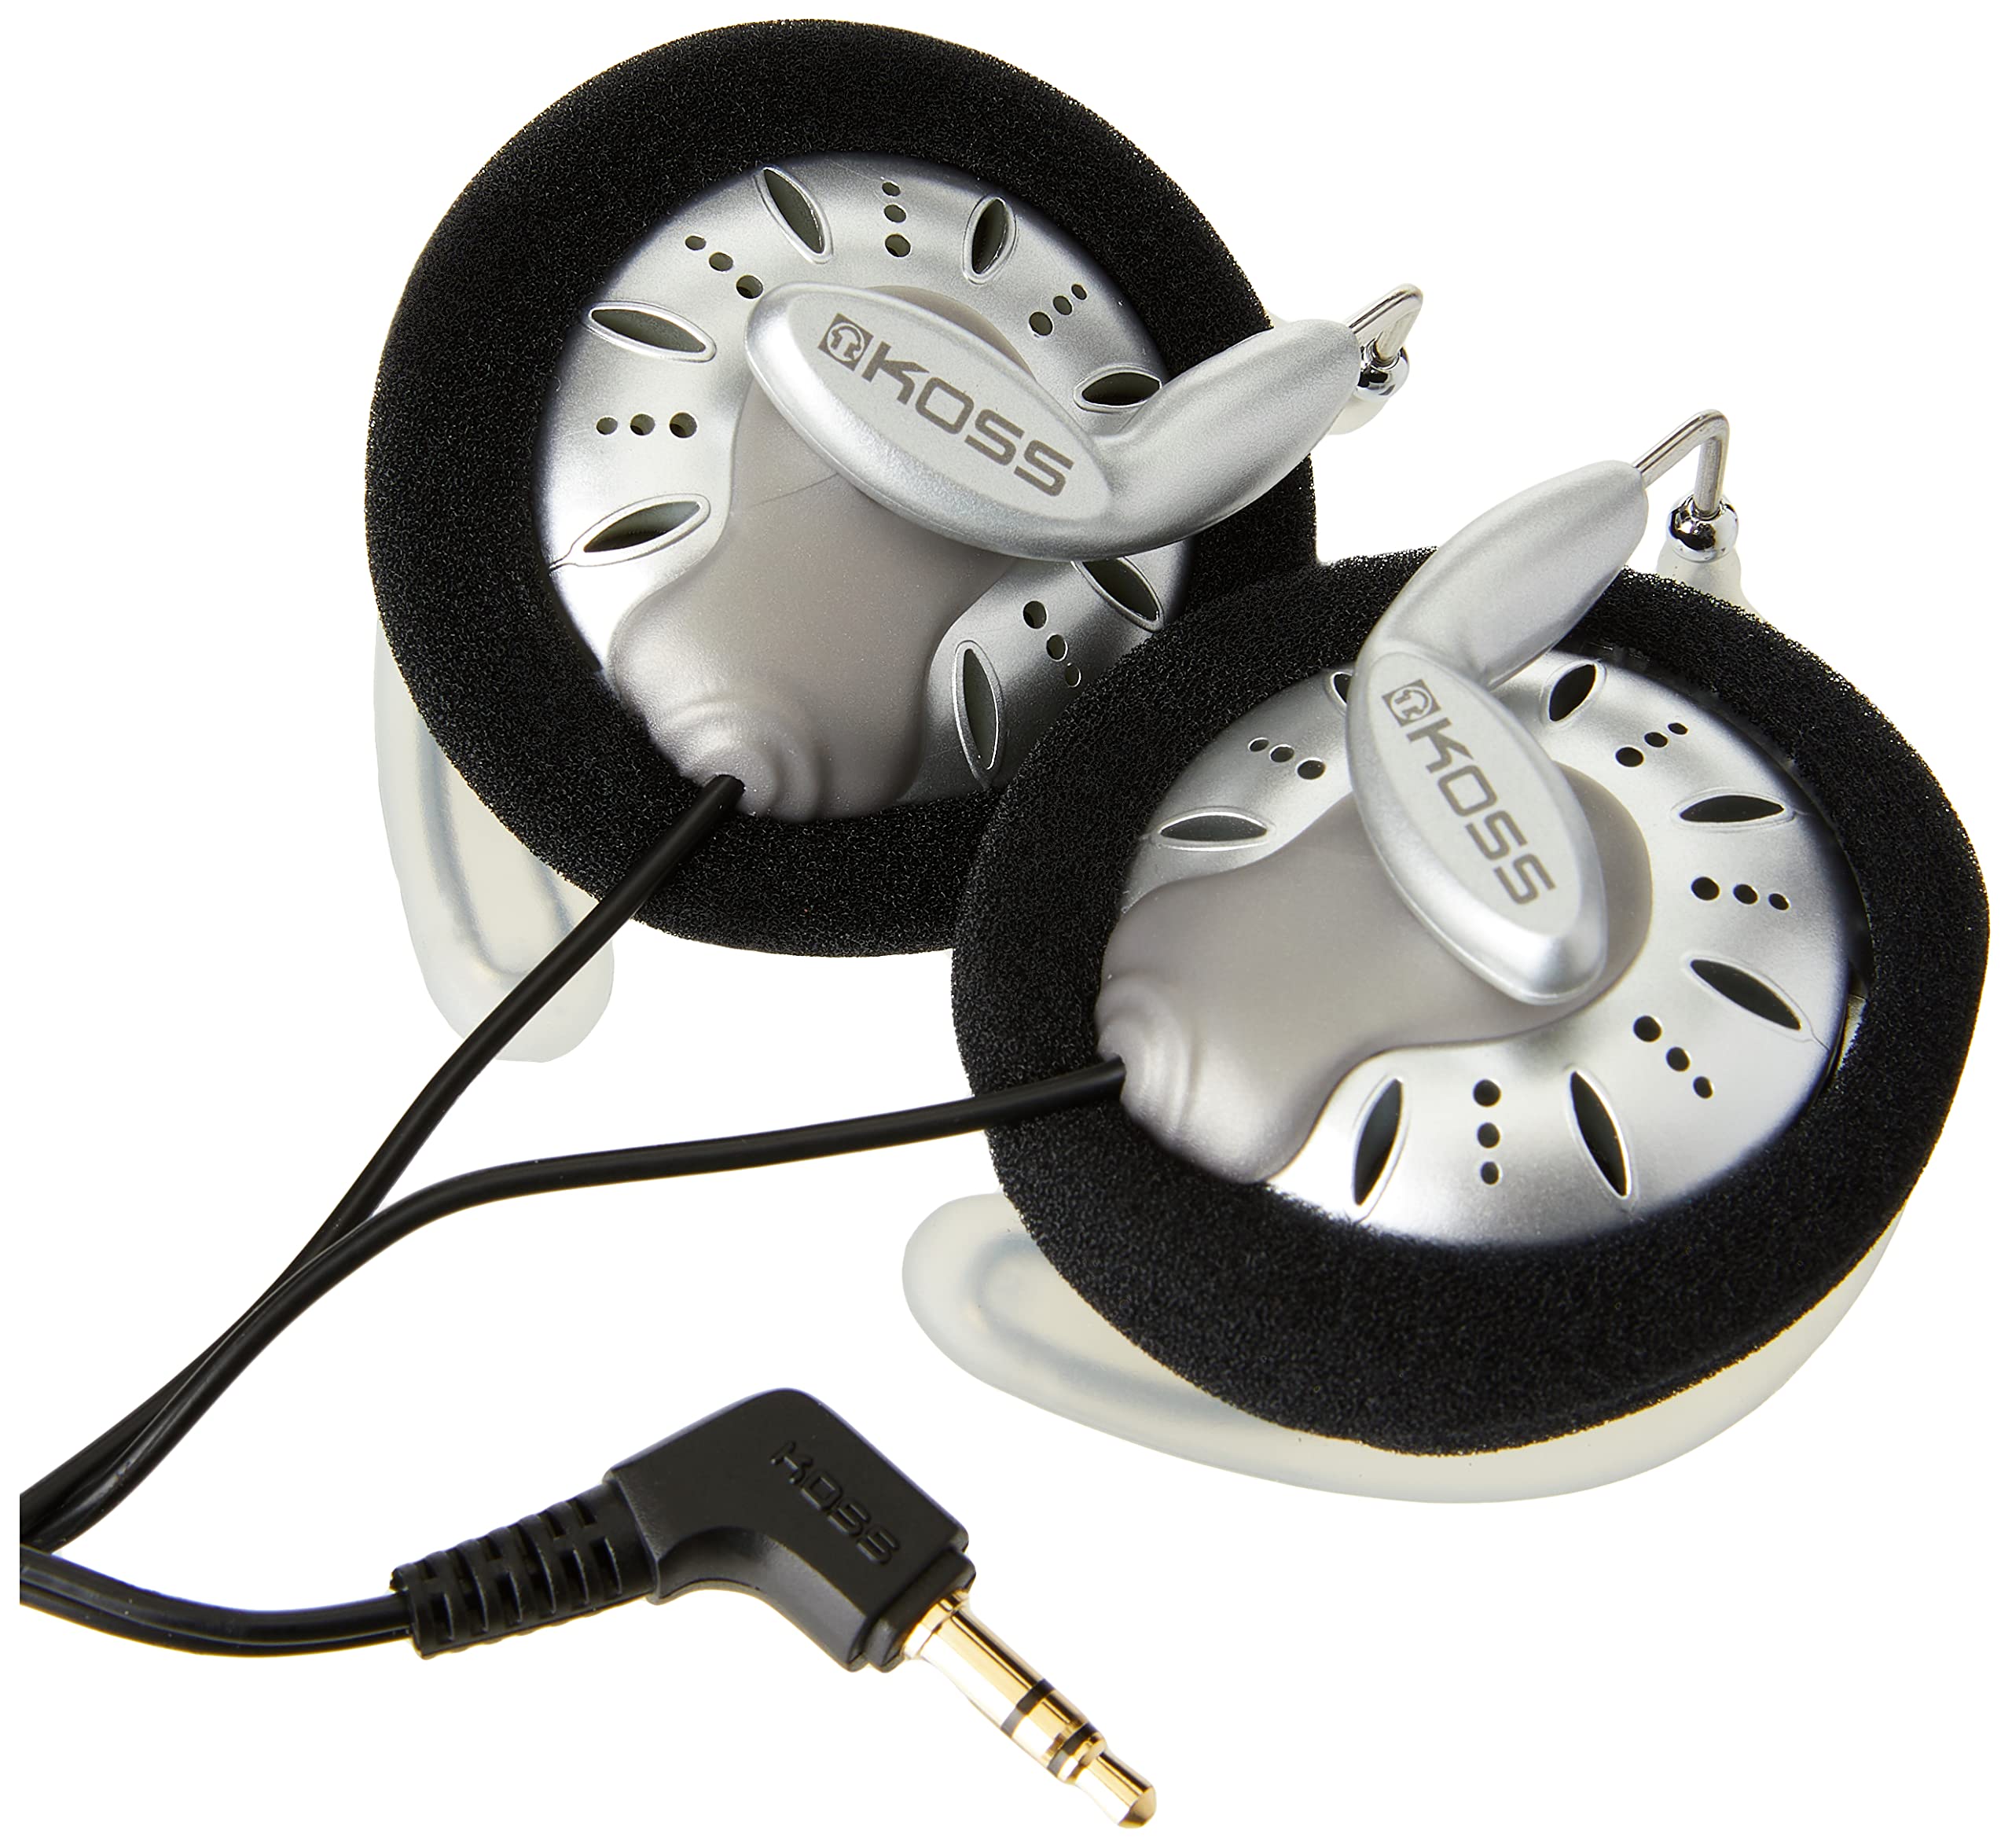 Koss KSC75 便携式立体声耳机，单个，标准包装白色/灰色...